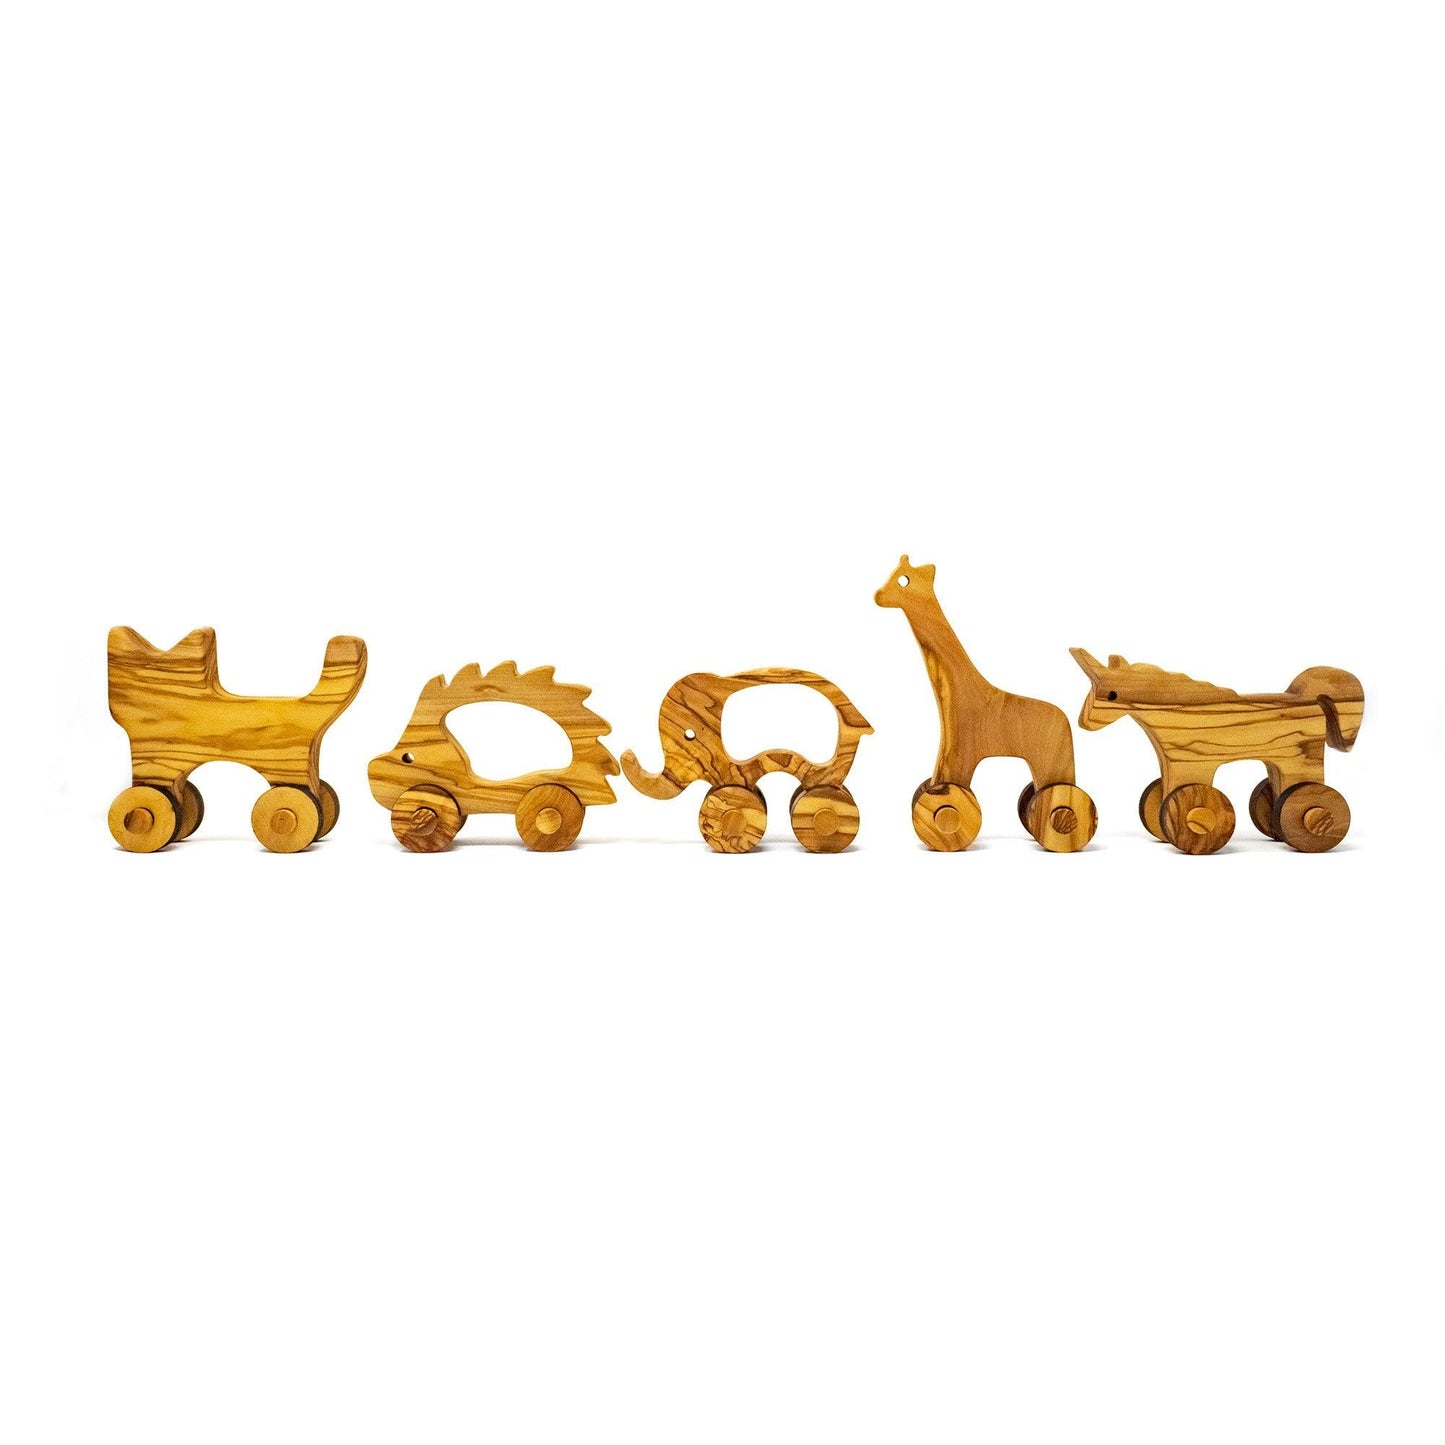 Handmade wooden figure toys, giraffe, unicorn, cat, hedgehog, elephant